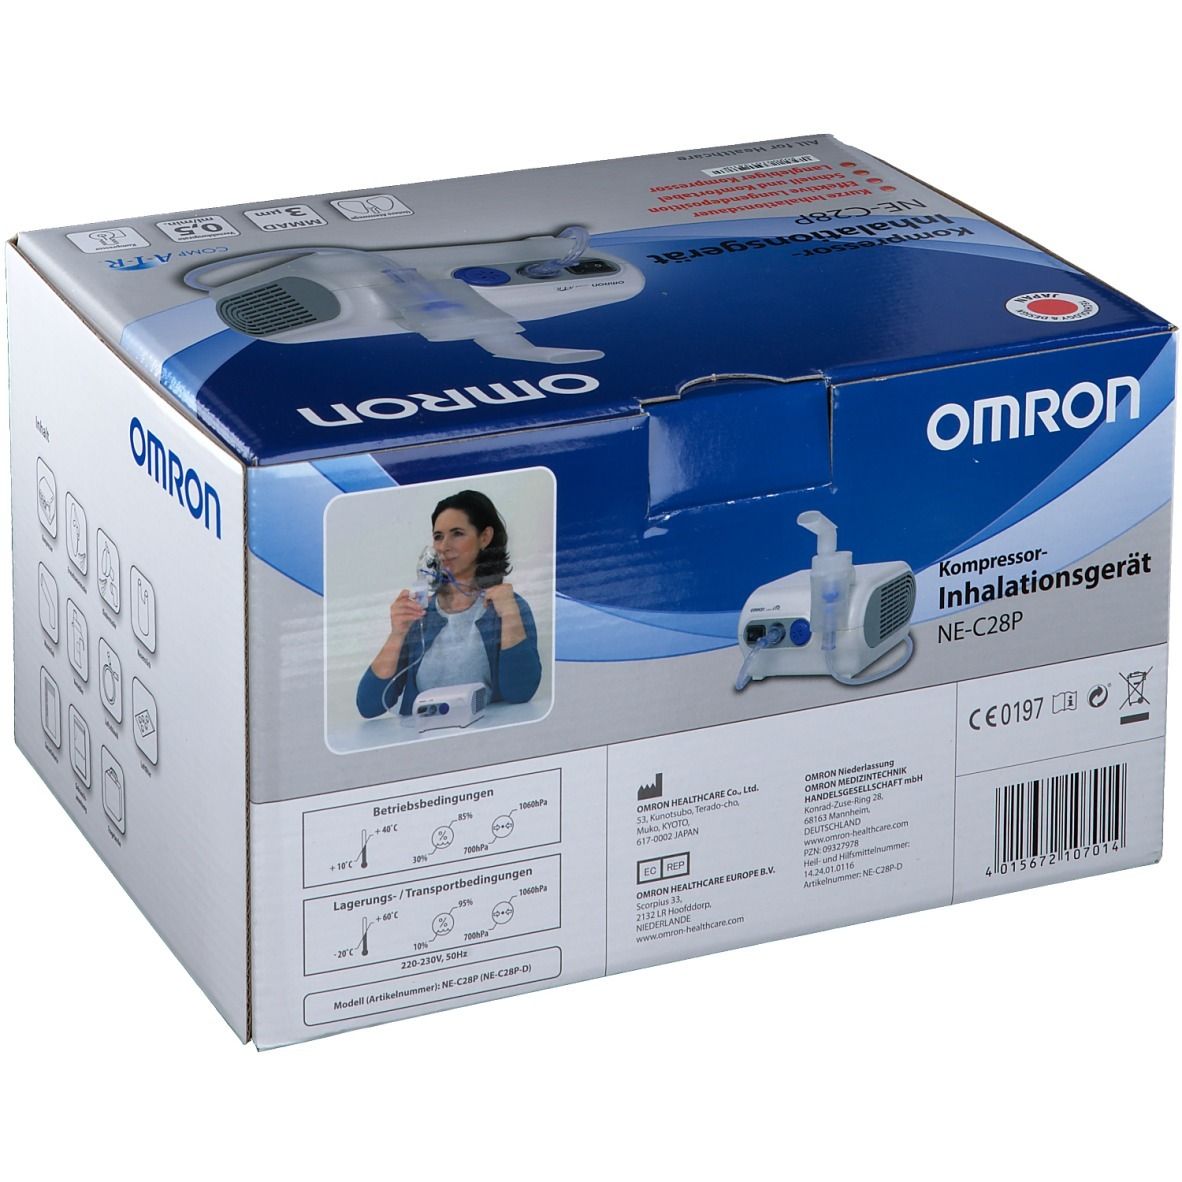 OMRON CompAir C28P Inhalationsgerät